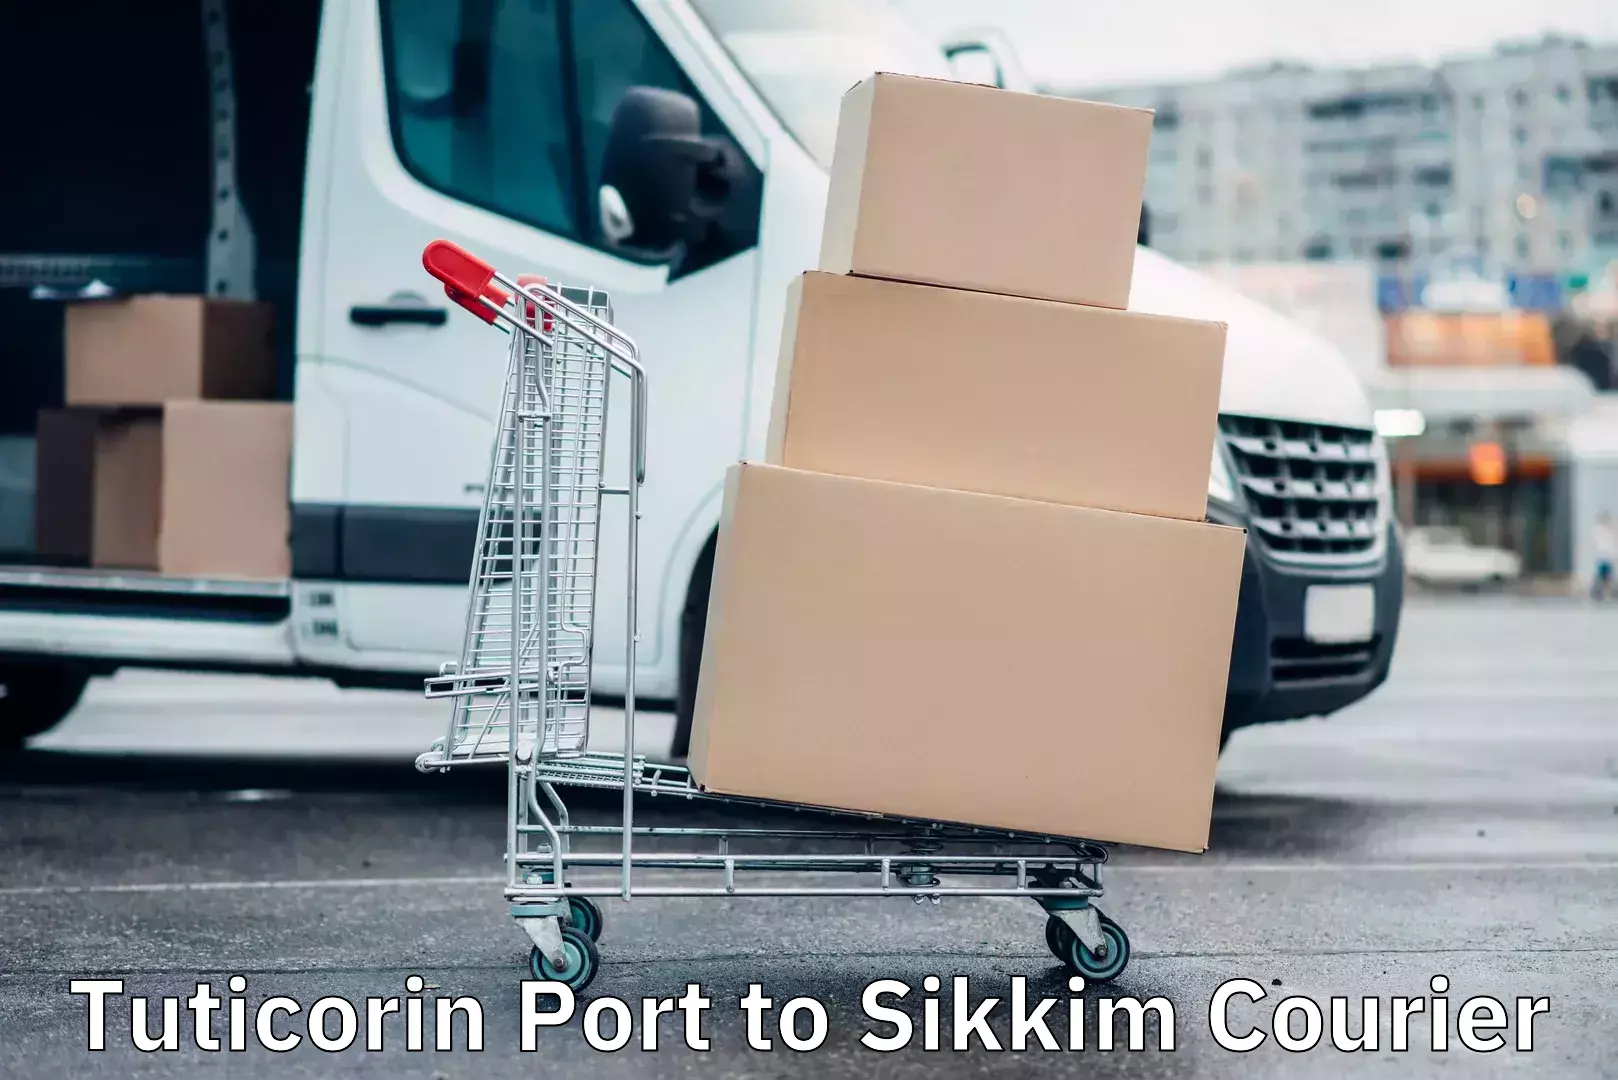 Courier service innovation Tuticorin Port to Sikkim